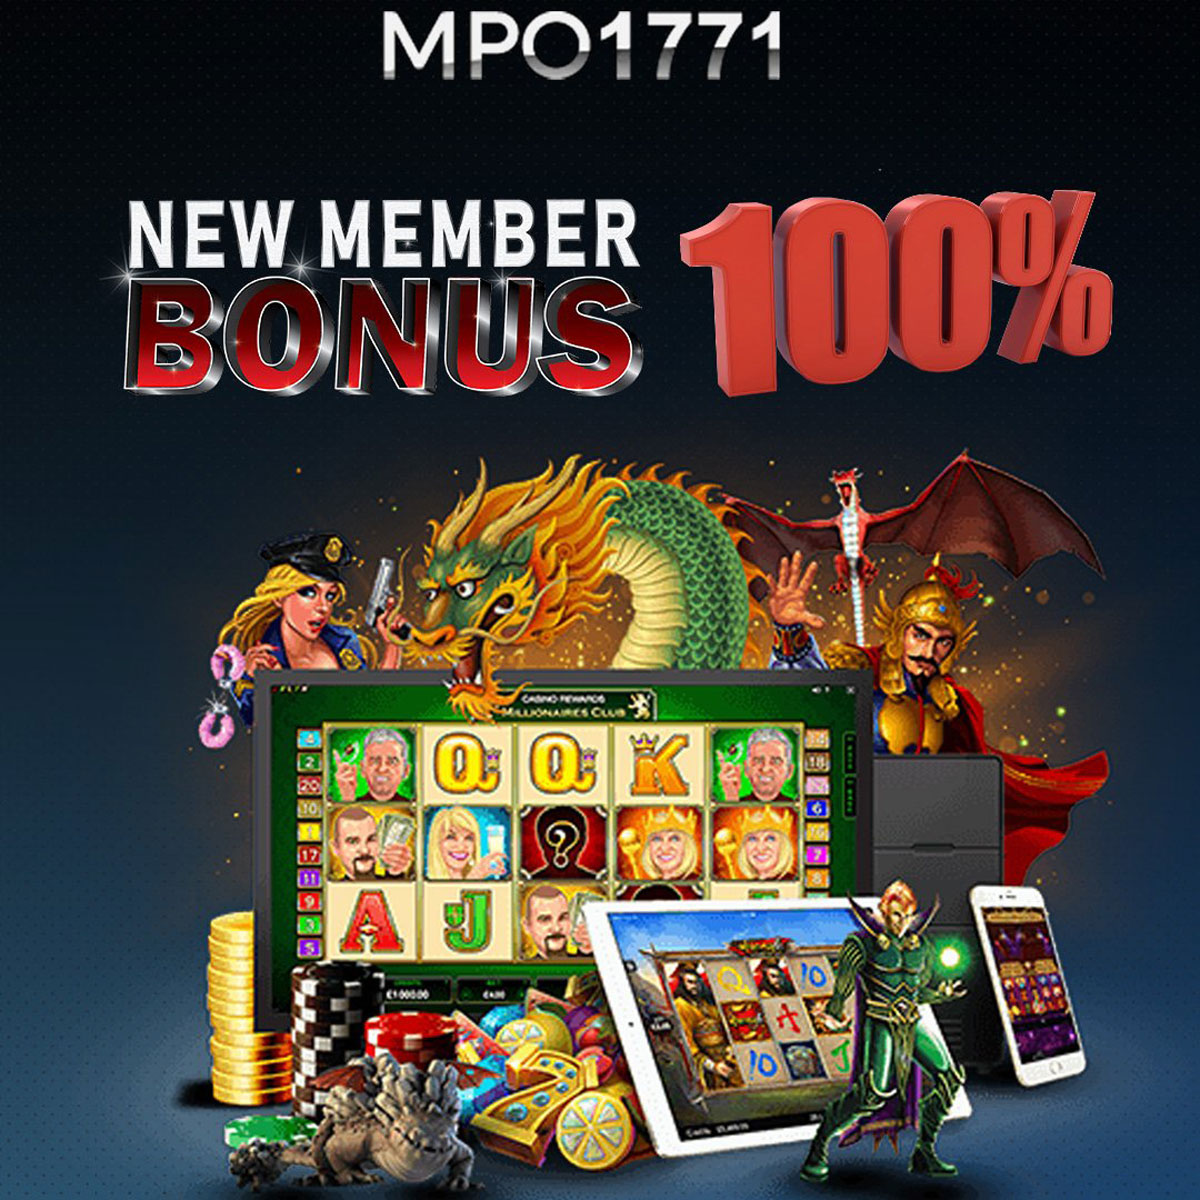 MPO1771 bonus new member 100%